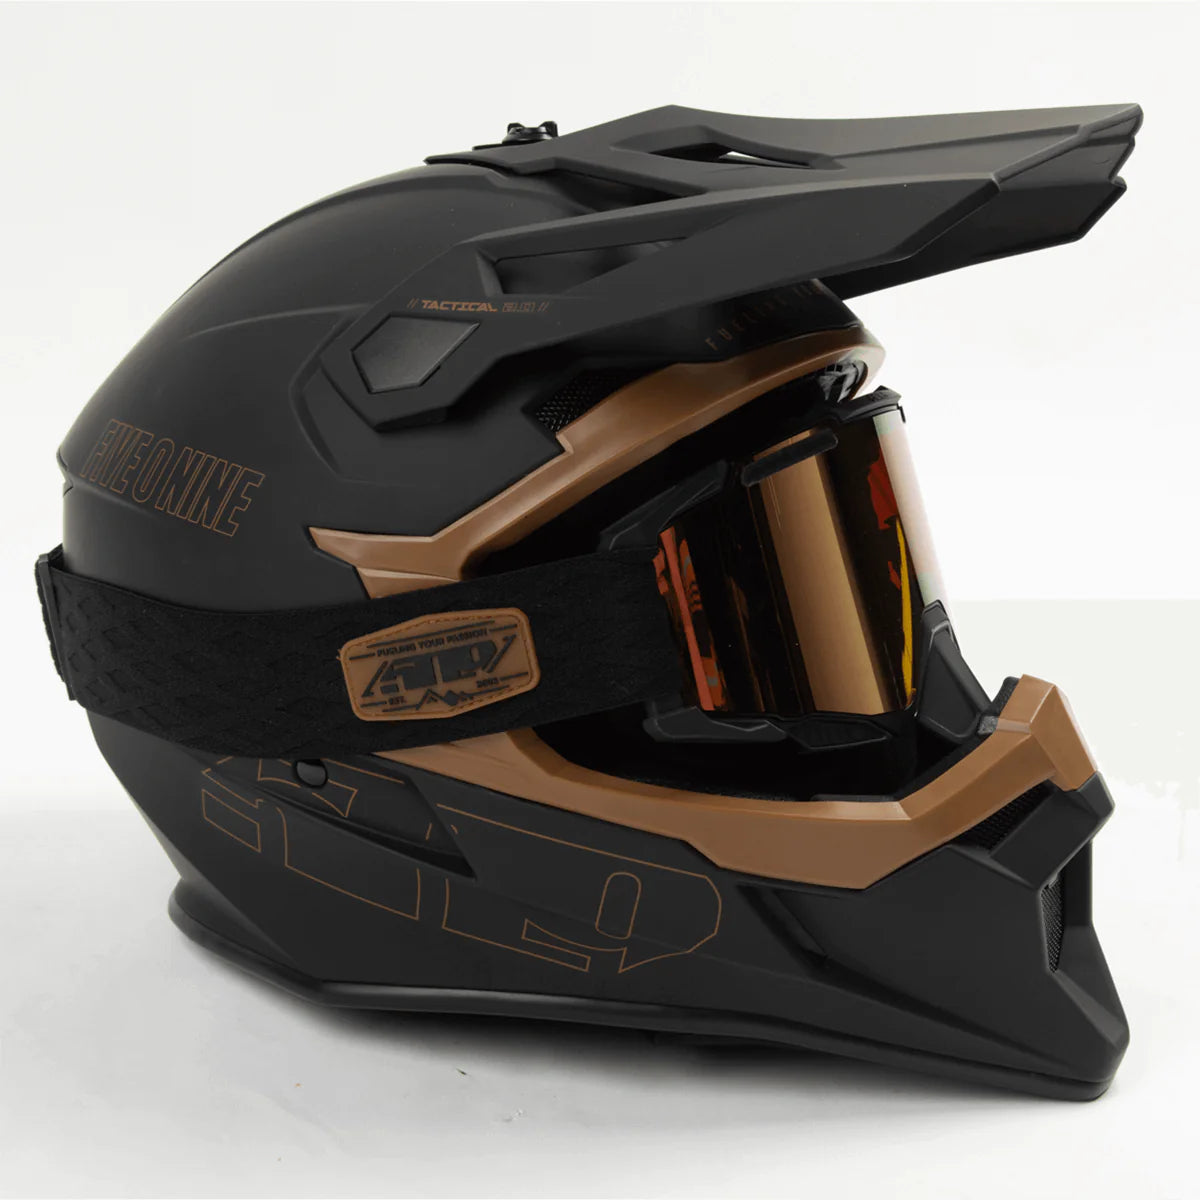 509 Tactical 2.0 Helmet